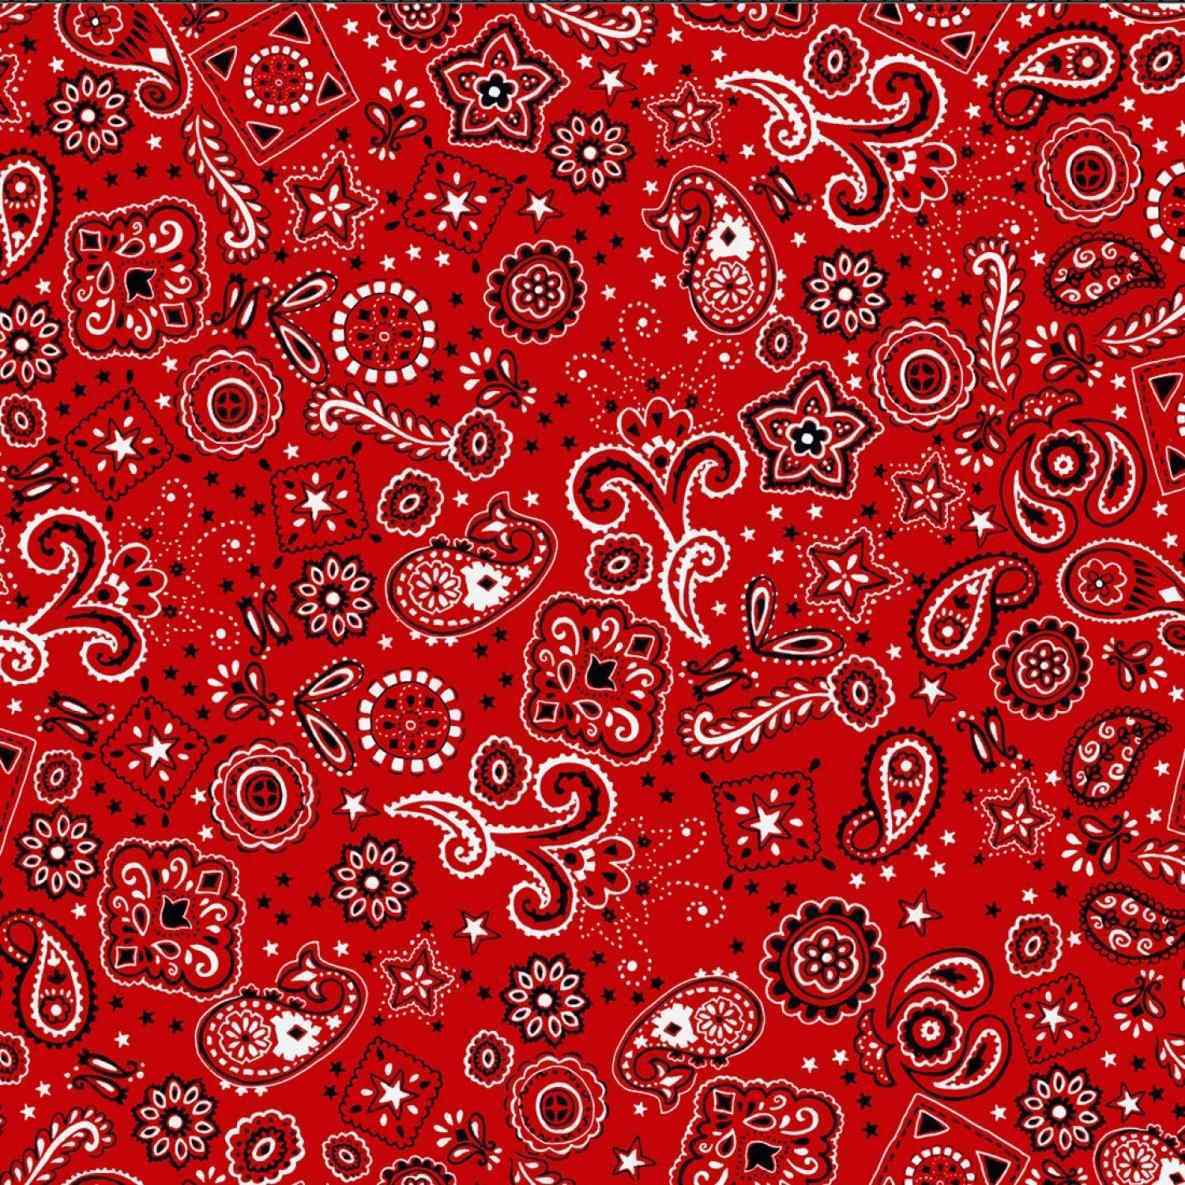 Red Bandana Wallpaper (Picture)